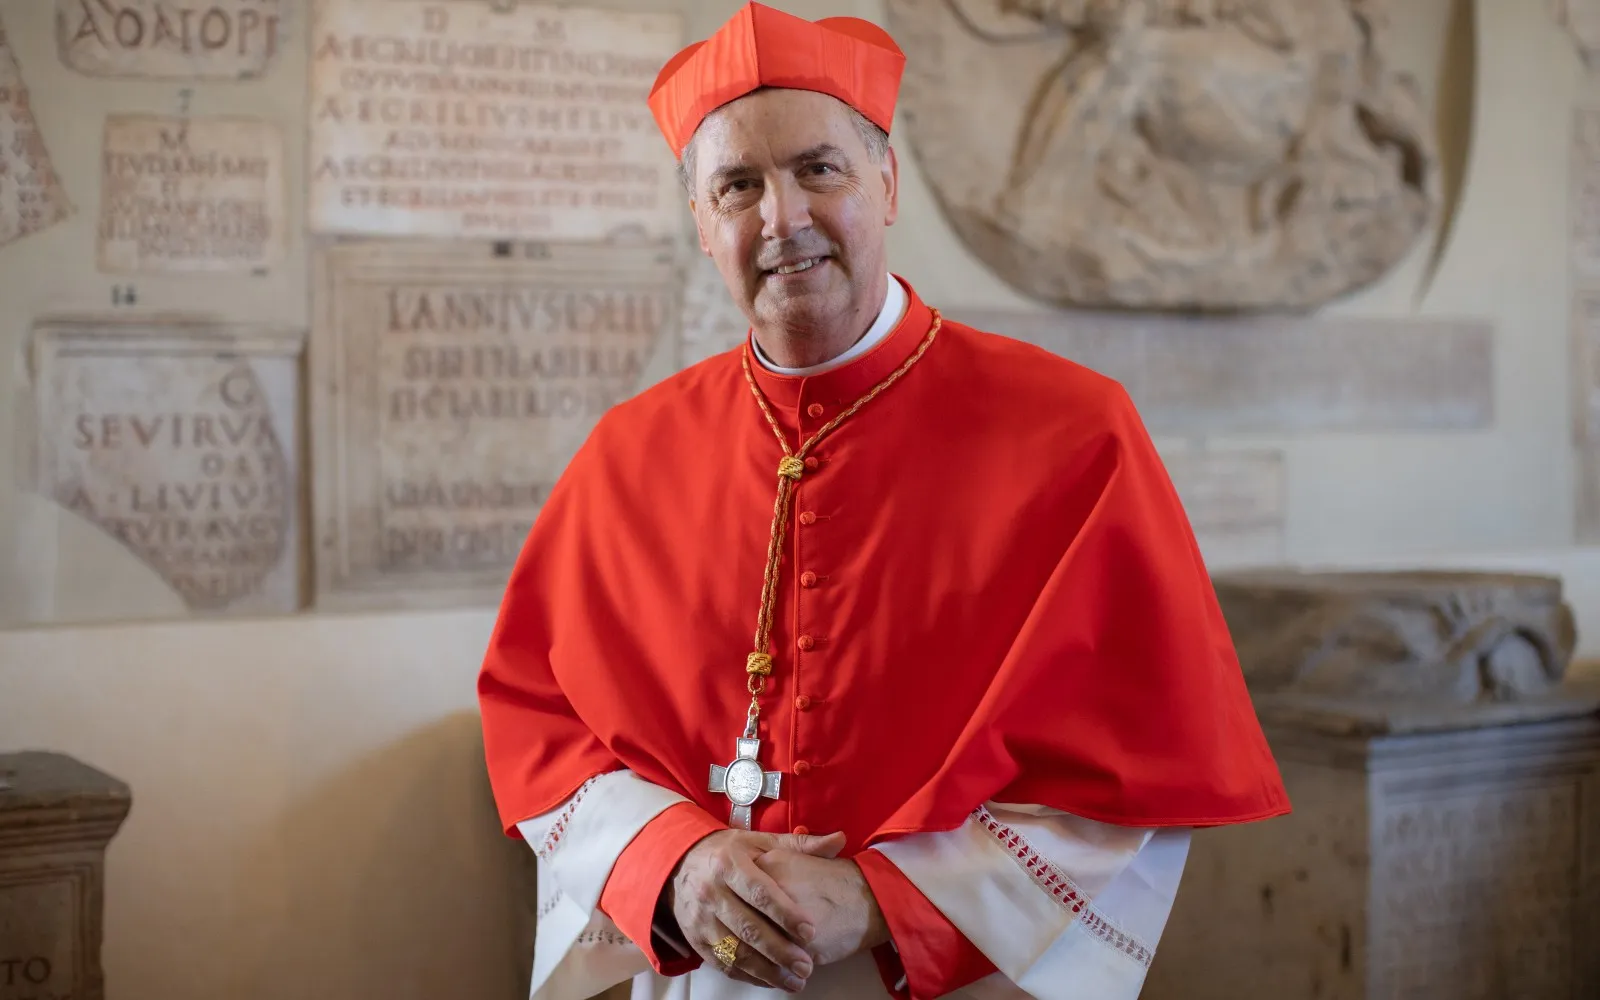 Cardinal Fernández Artime, successor of Don Bosco: I will continue to serve with simplicity